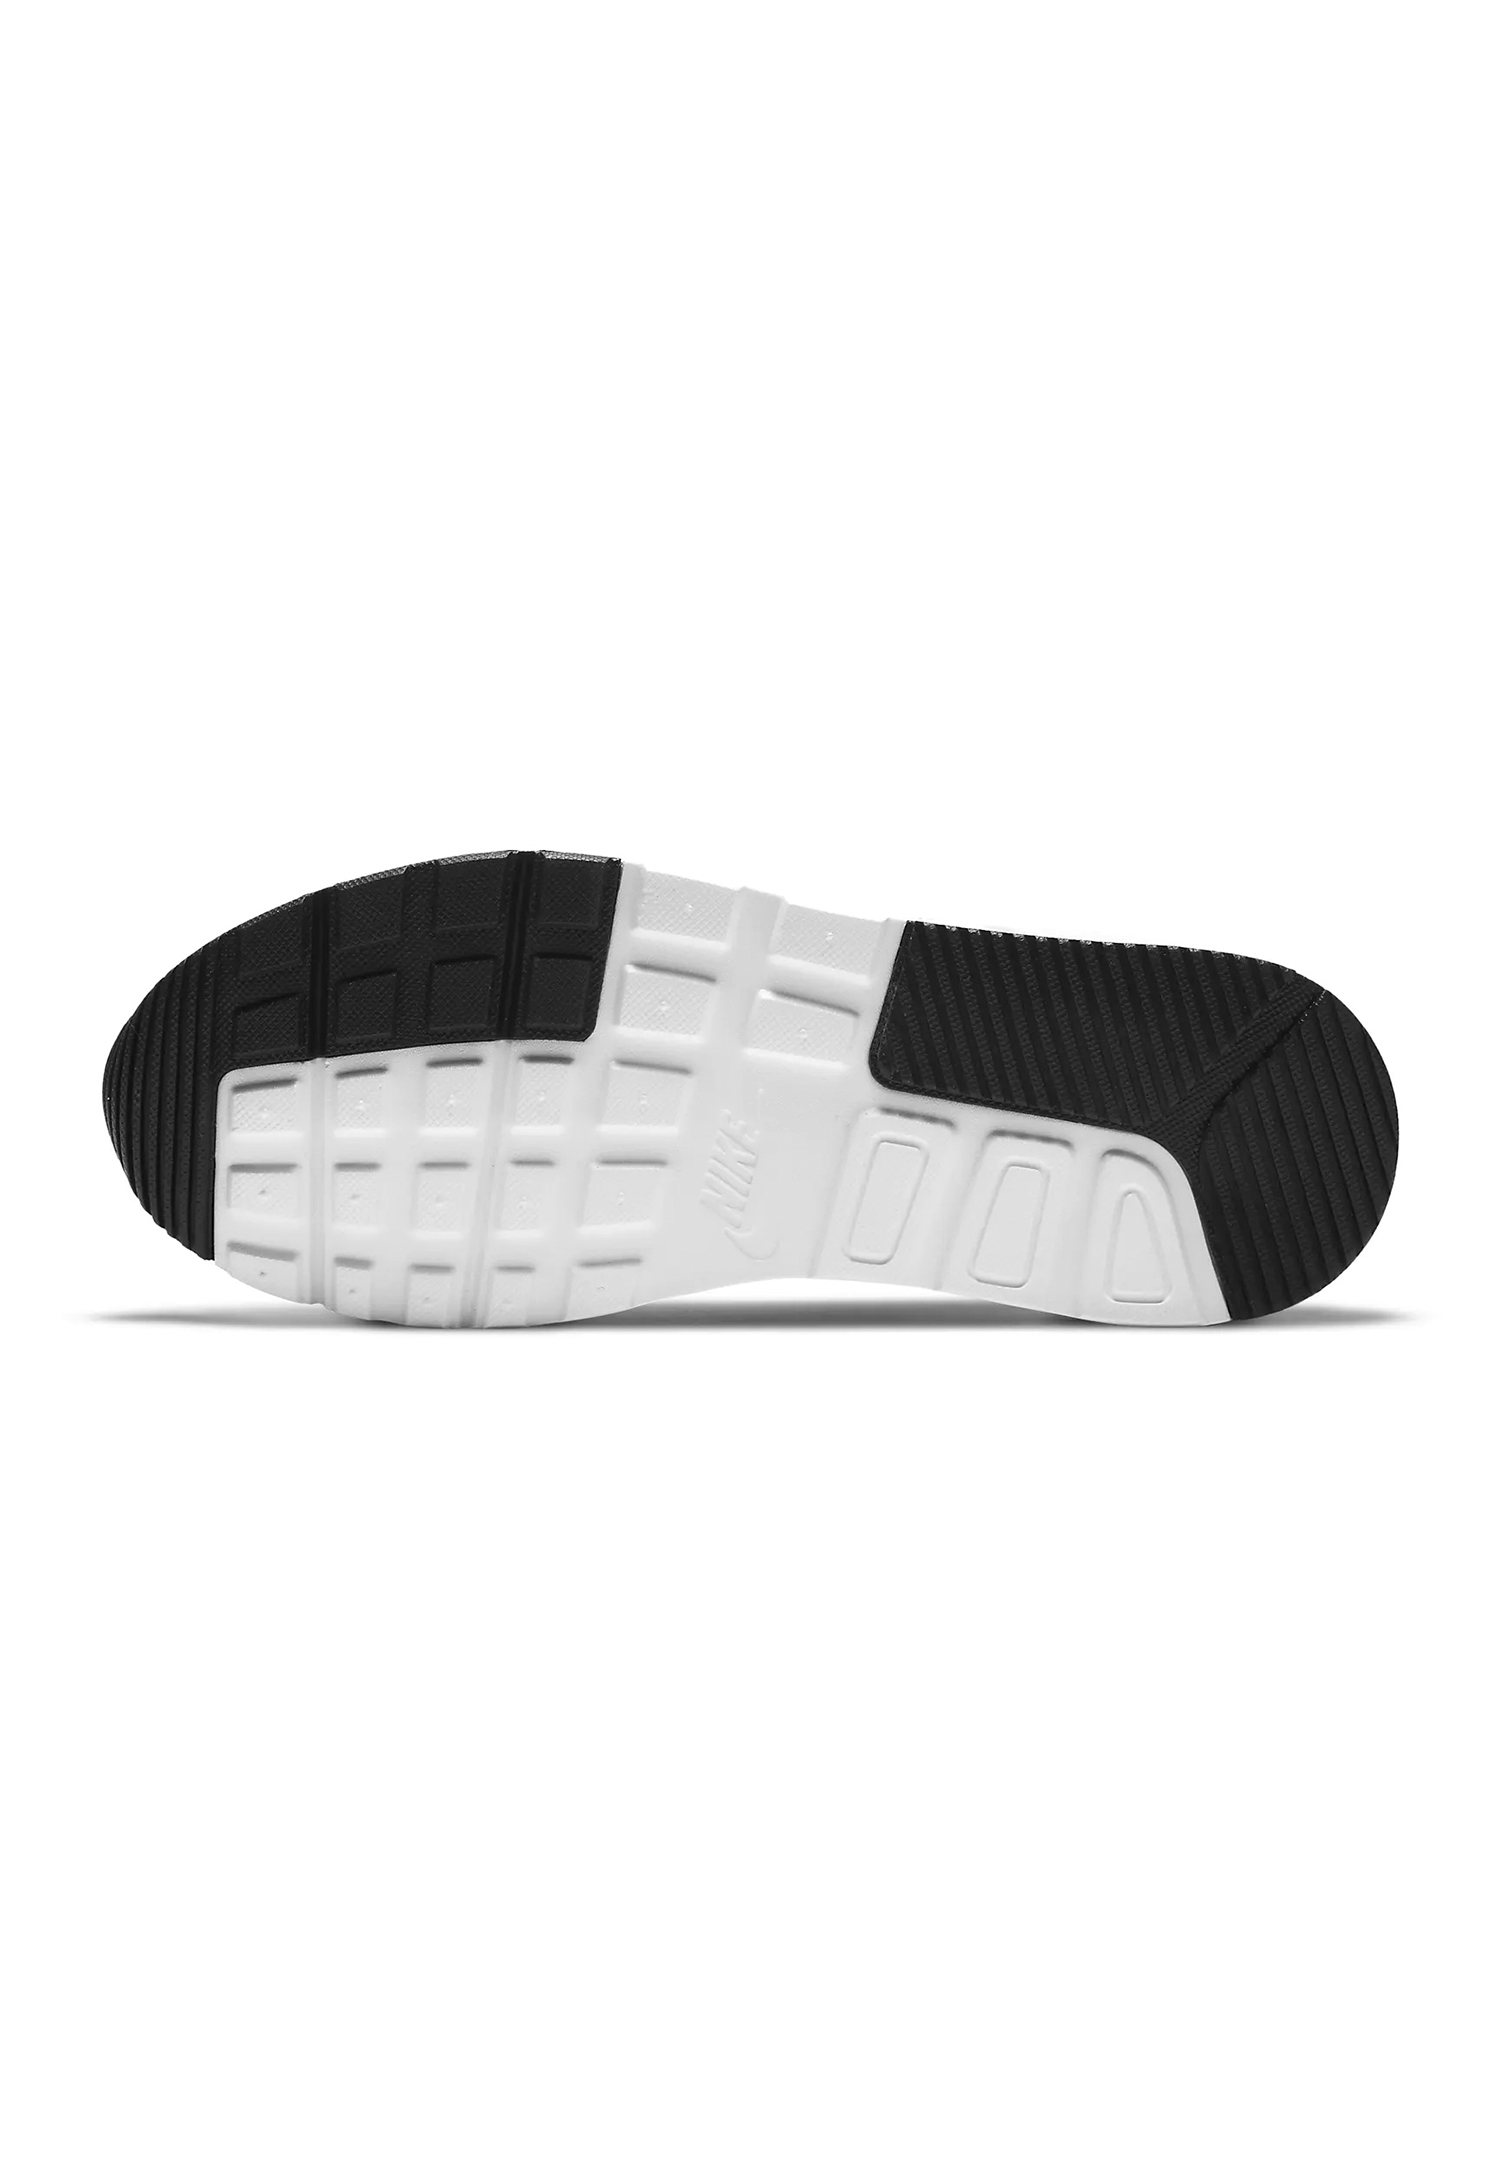 Nike AIR MAX SC Damen Sneaker CW4554 001 schwarz